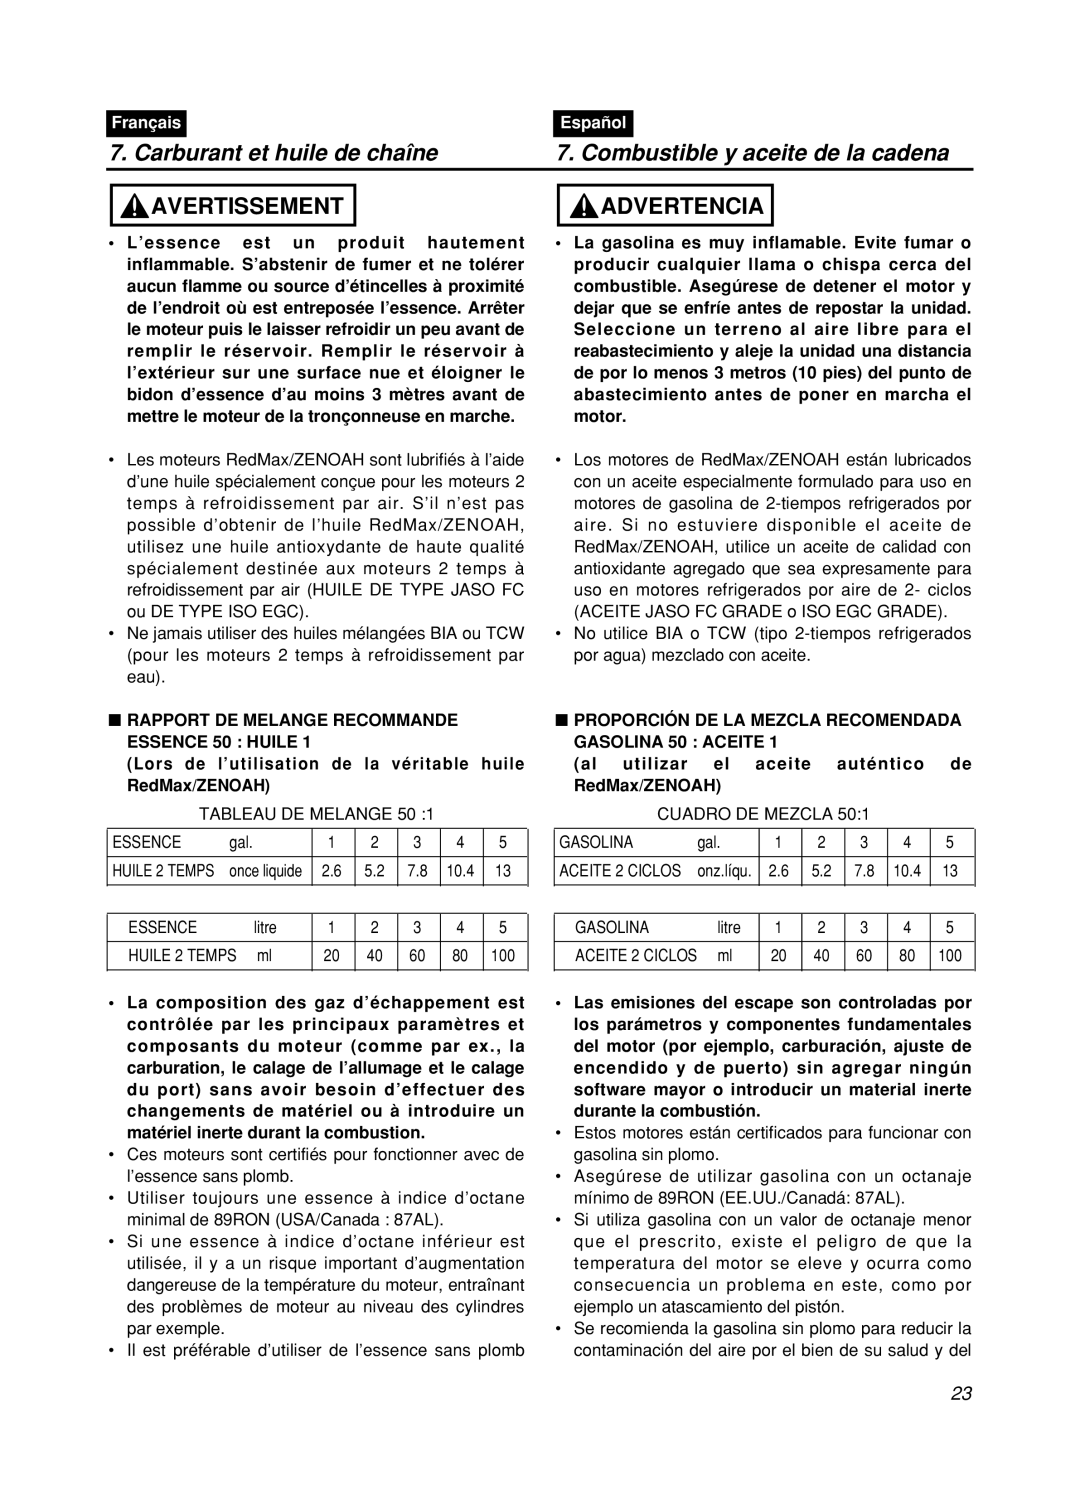 Zenoah GZ400 manual Carburant et huile de chaîne, Combustible y aceite de la cadena, Avertissement, Advertencia, Français 